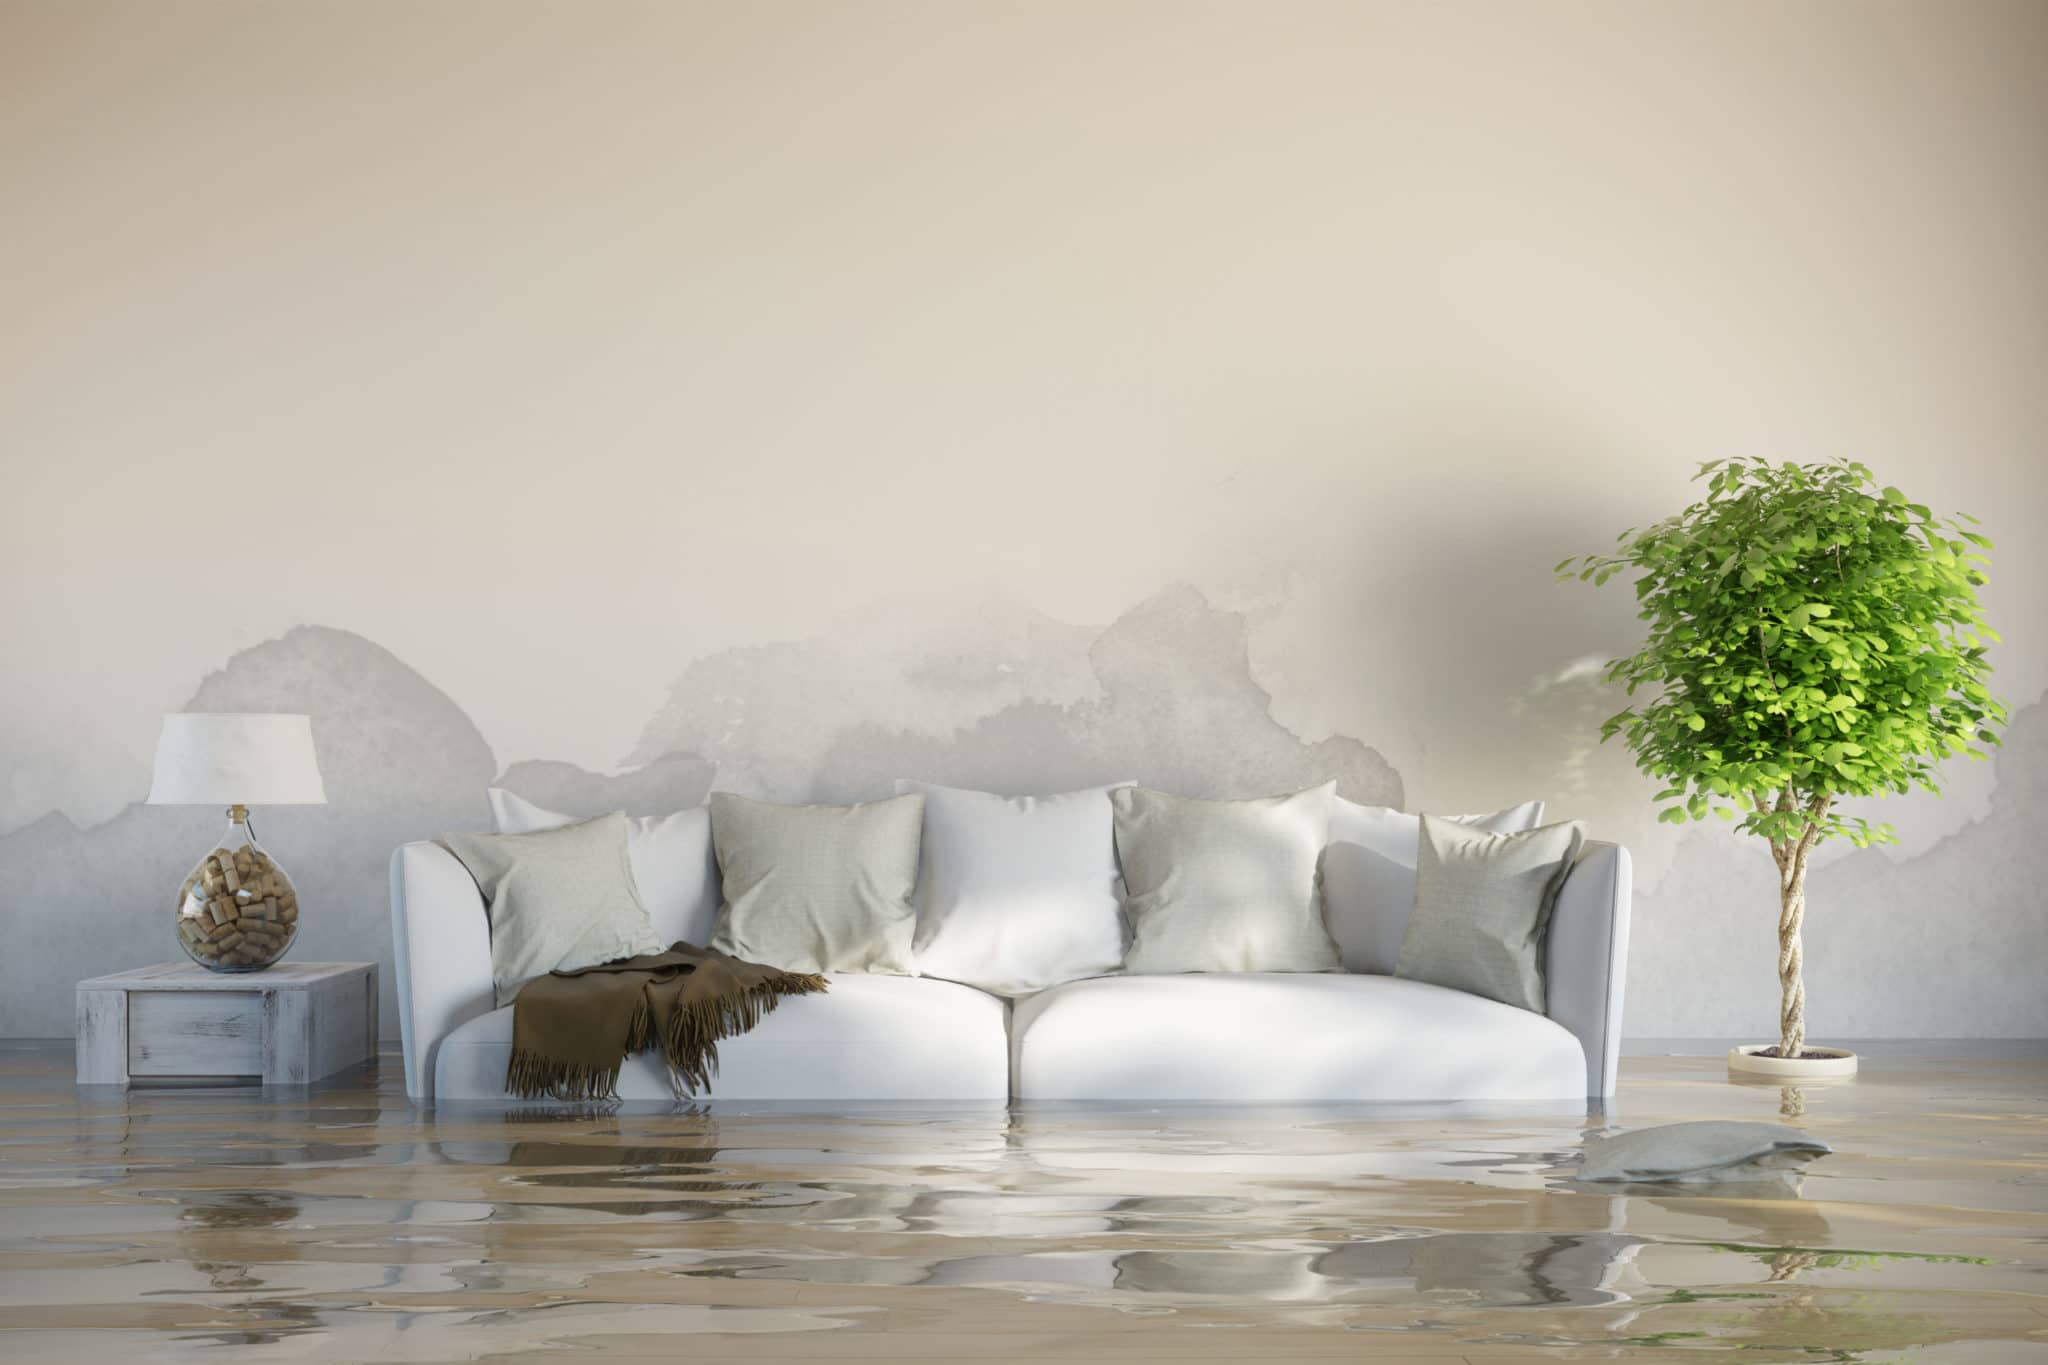 flooded living room